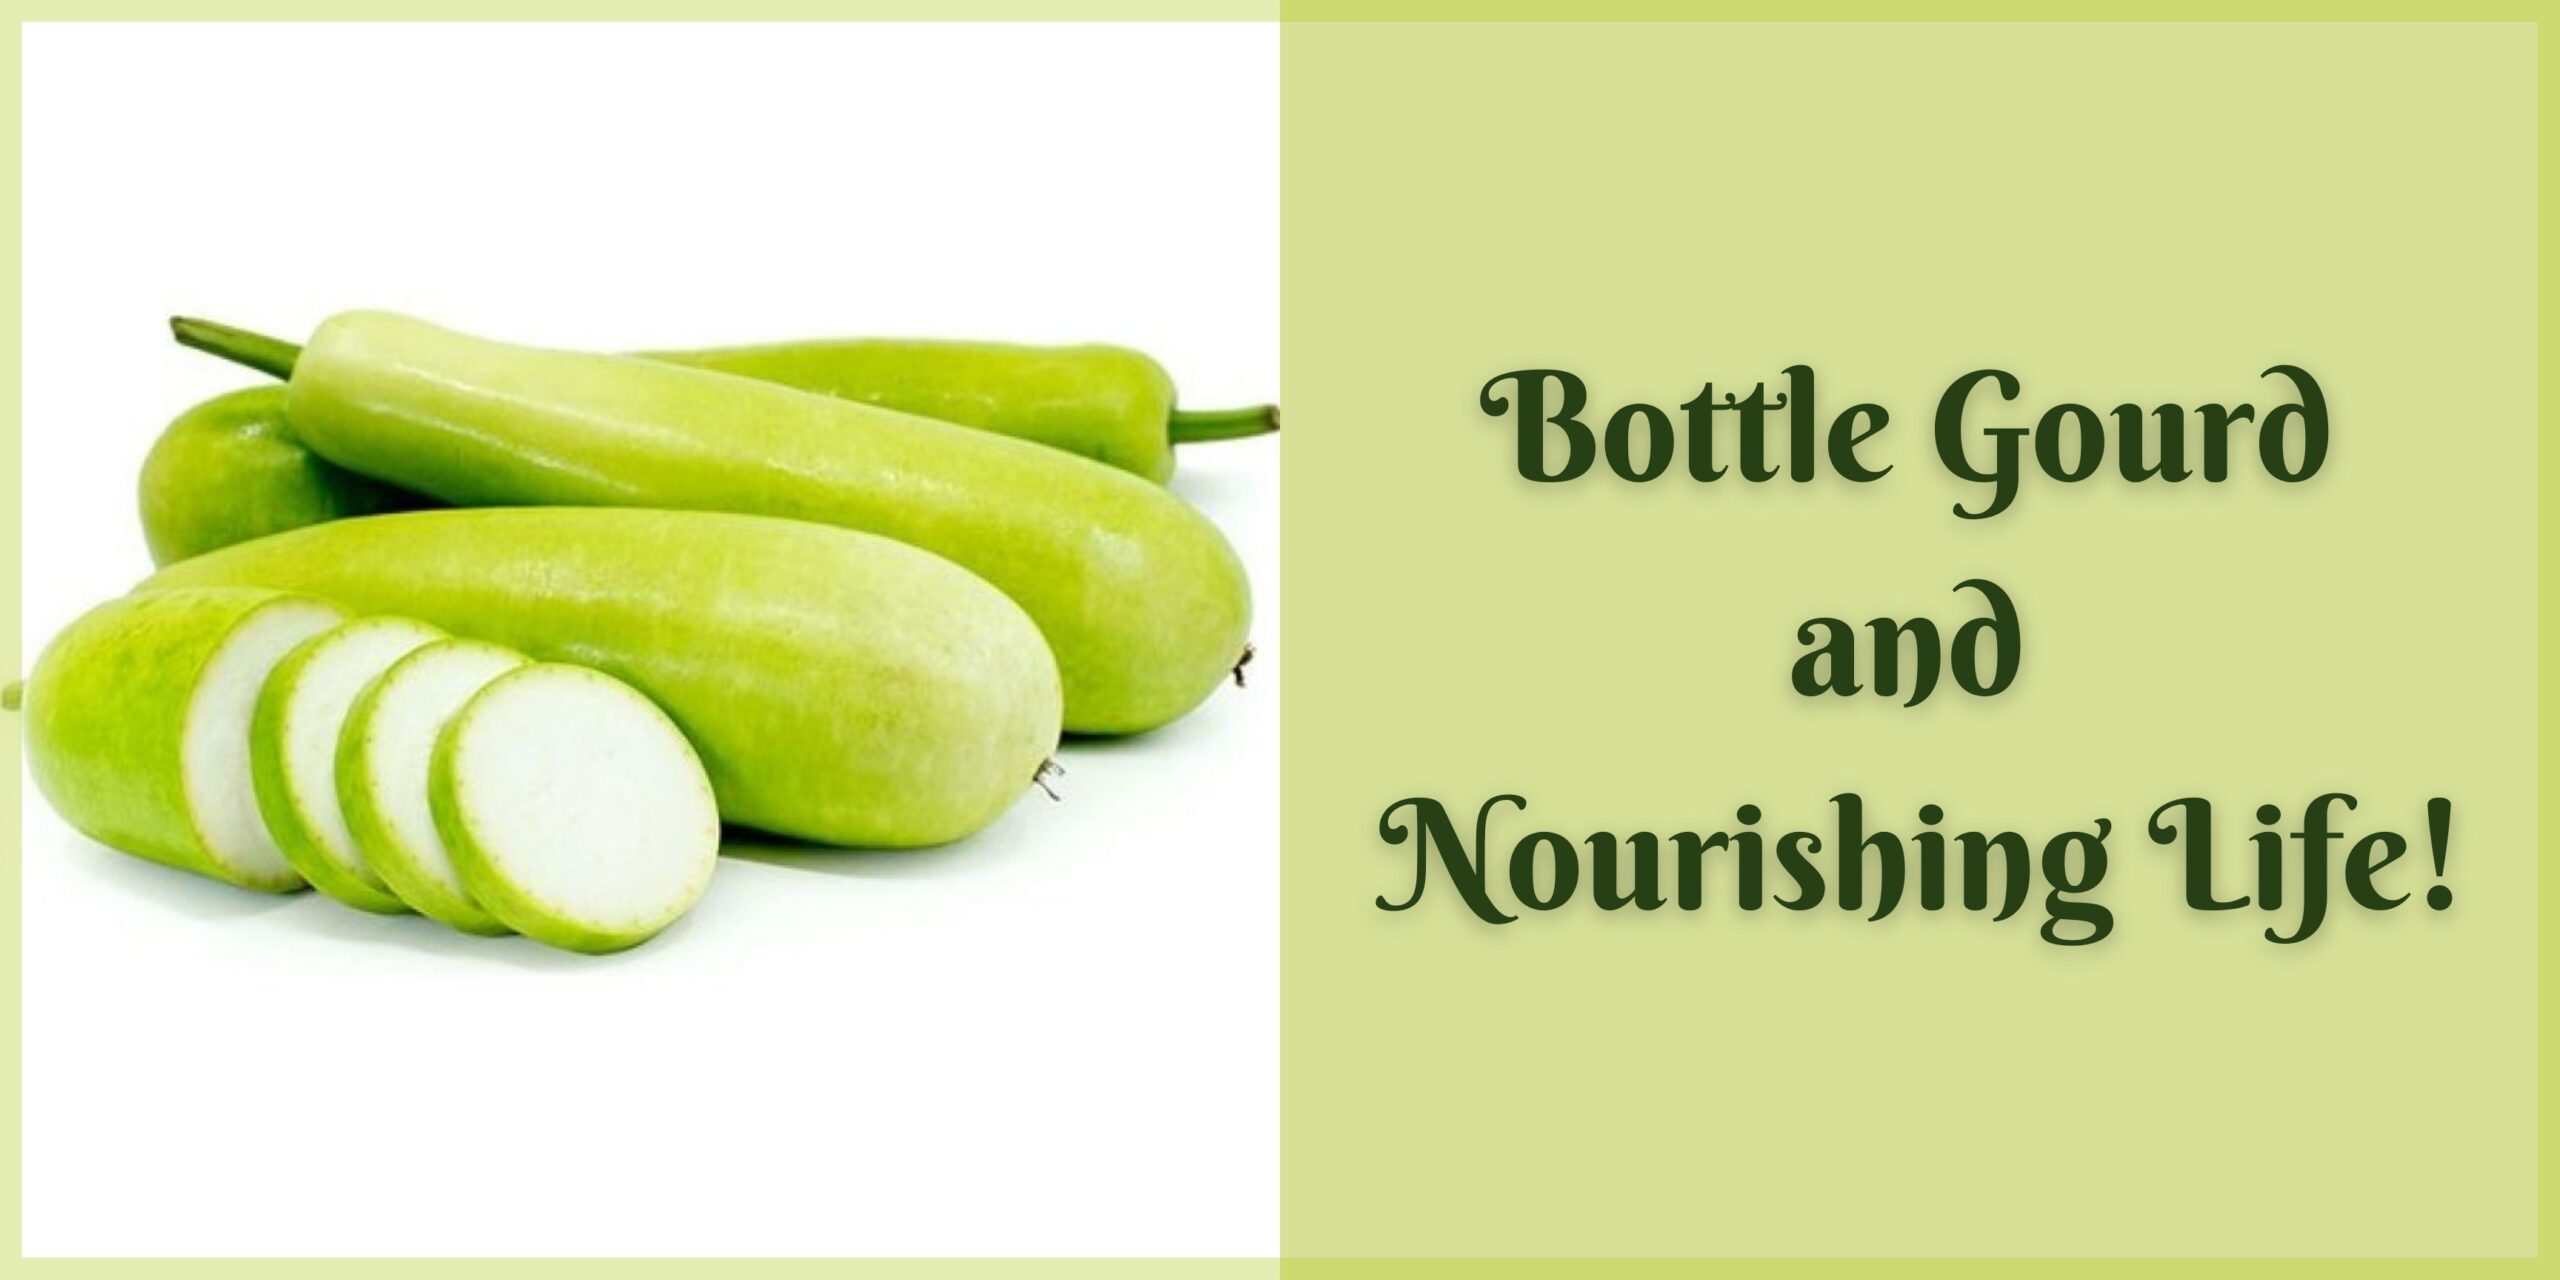 Bottle gourd and nourishing life! - Uyir Organic Farmers Market